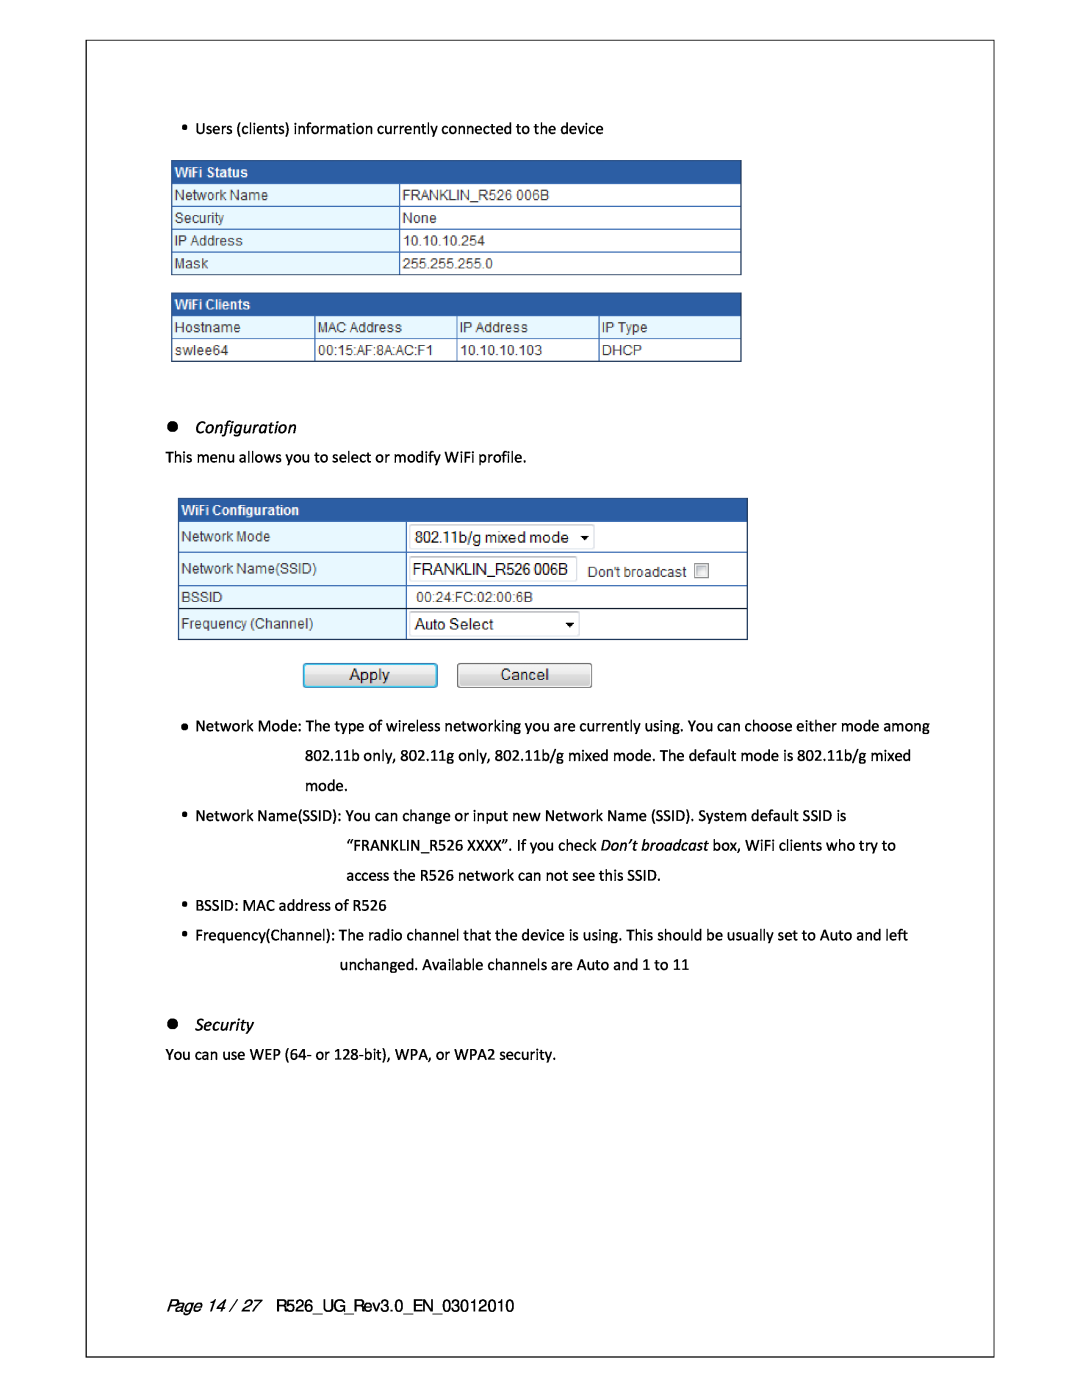 Franklin warranty zSecurity, zConfiguration, Page 14 / 27 R526_UG_Rev3.0_EN_03012010 